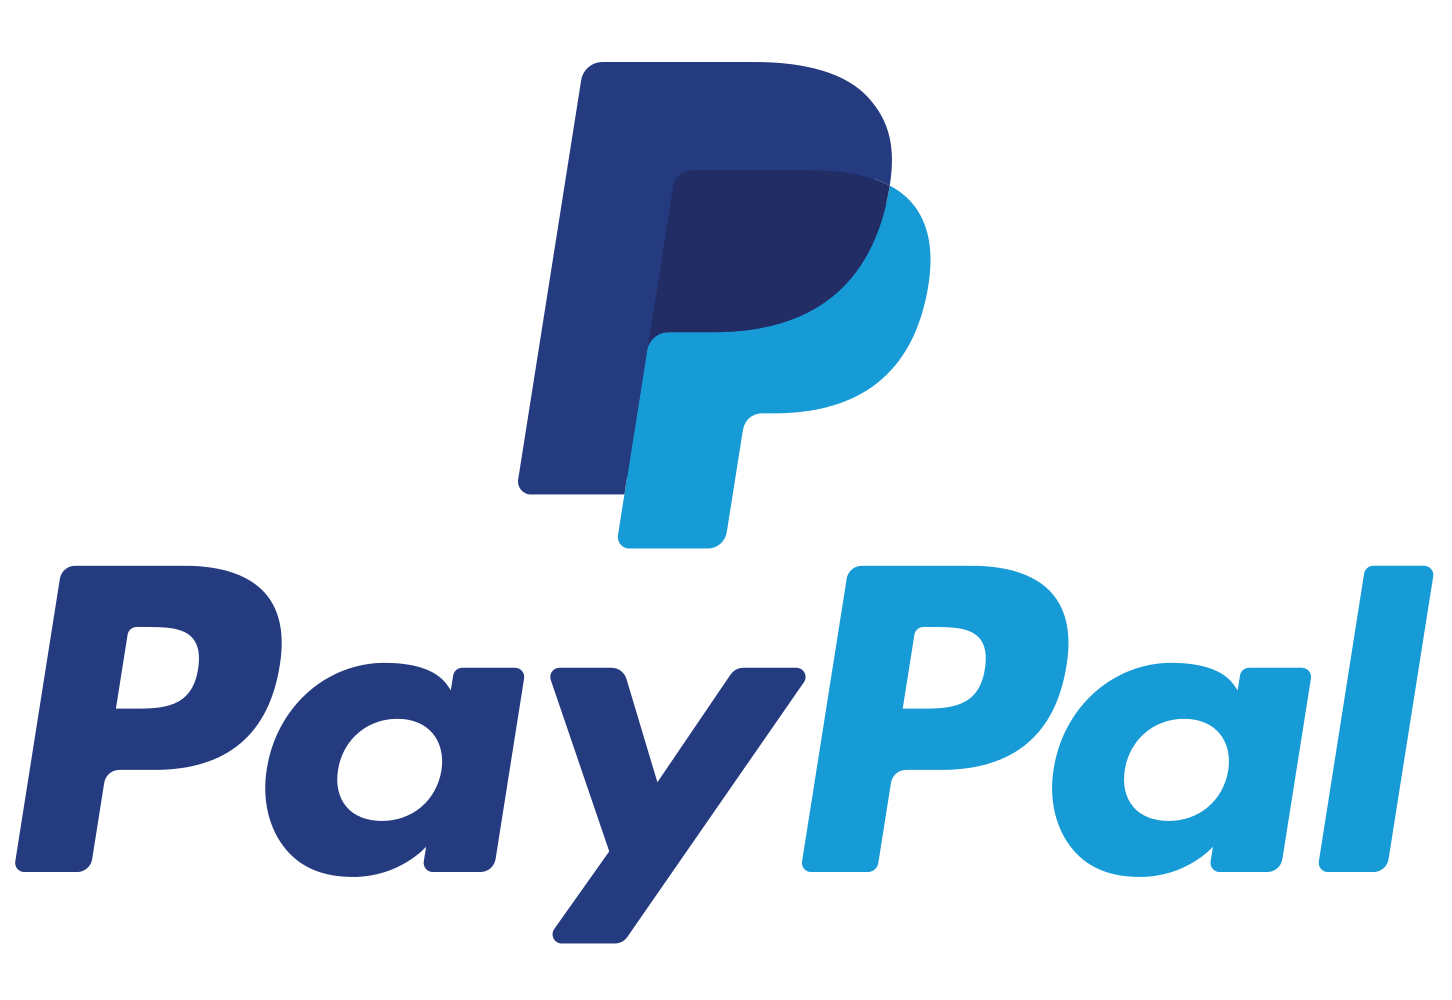 Paypal беларусь. PAYPAL логотип. PAYPAL PNG. Пейпал логотип. Платежная система PAYPAL.